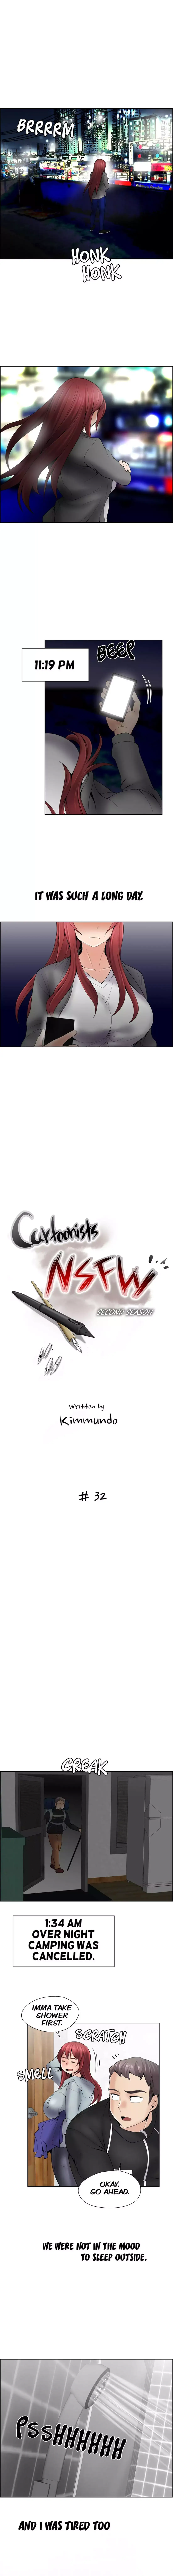 Cartoonists NSFW image